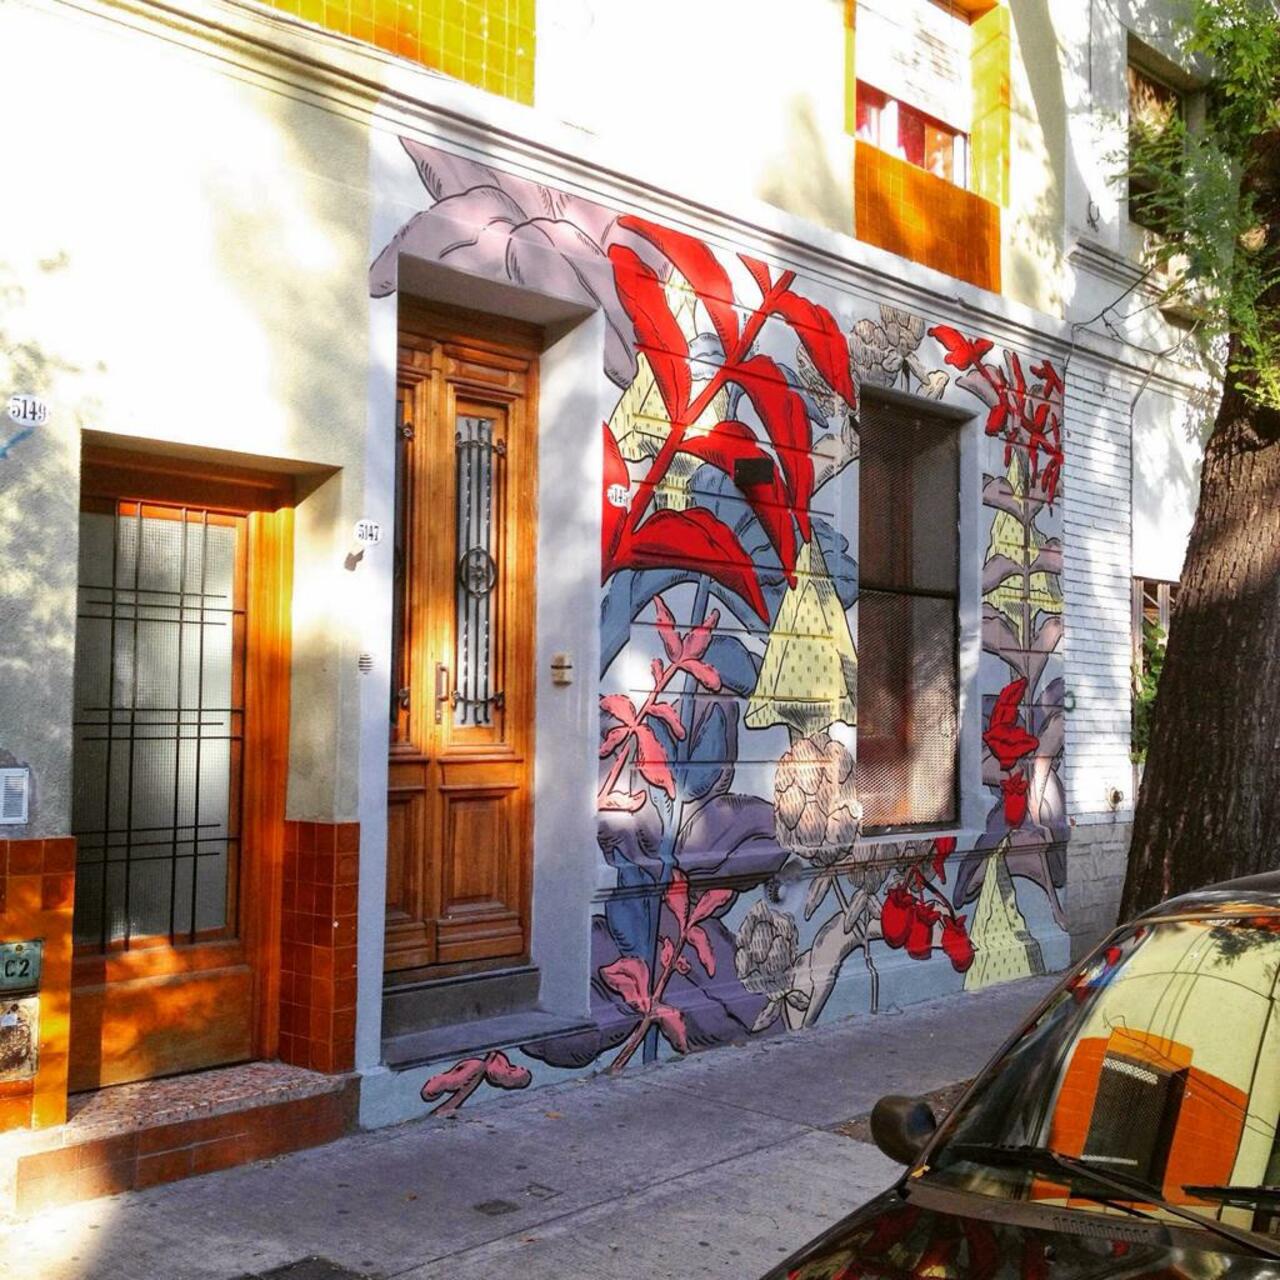 Streetart by Pastel in South America

#Streetart #mural #Urbanart #art #Graffiti http://t.co/T3tc2eiYAW